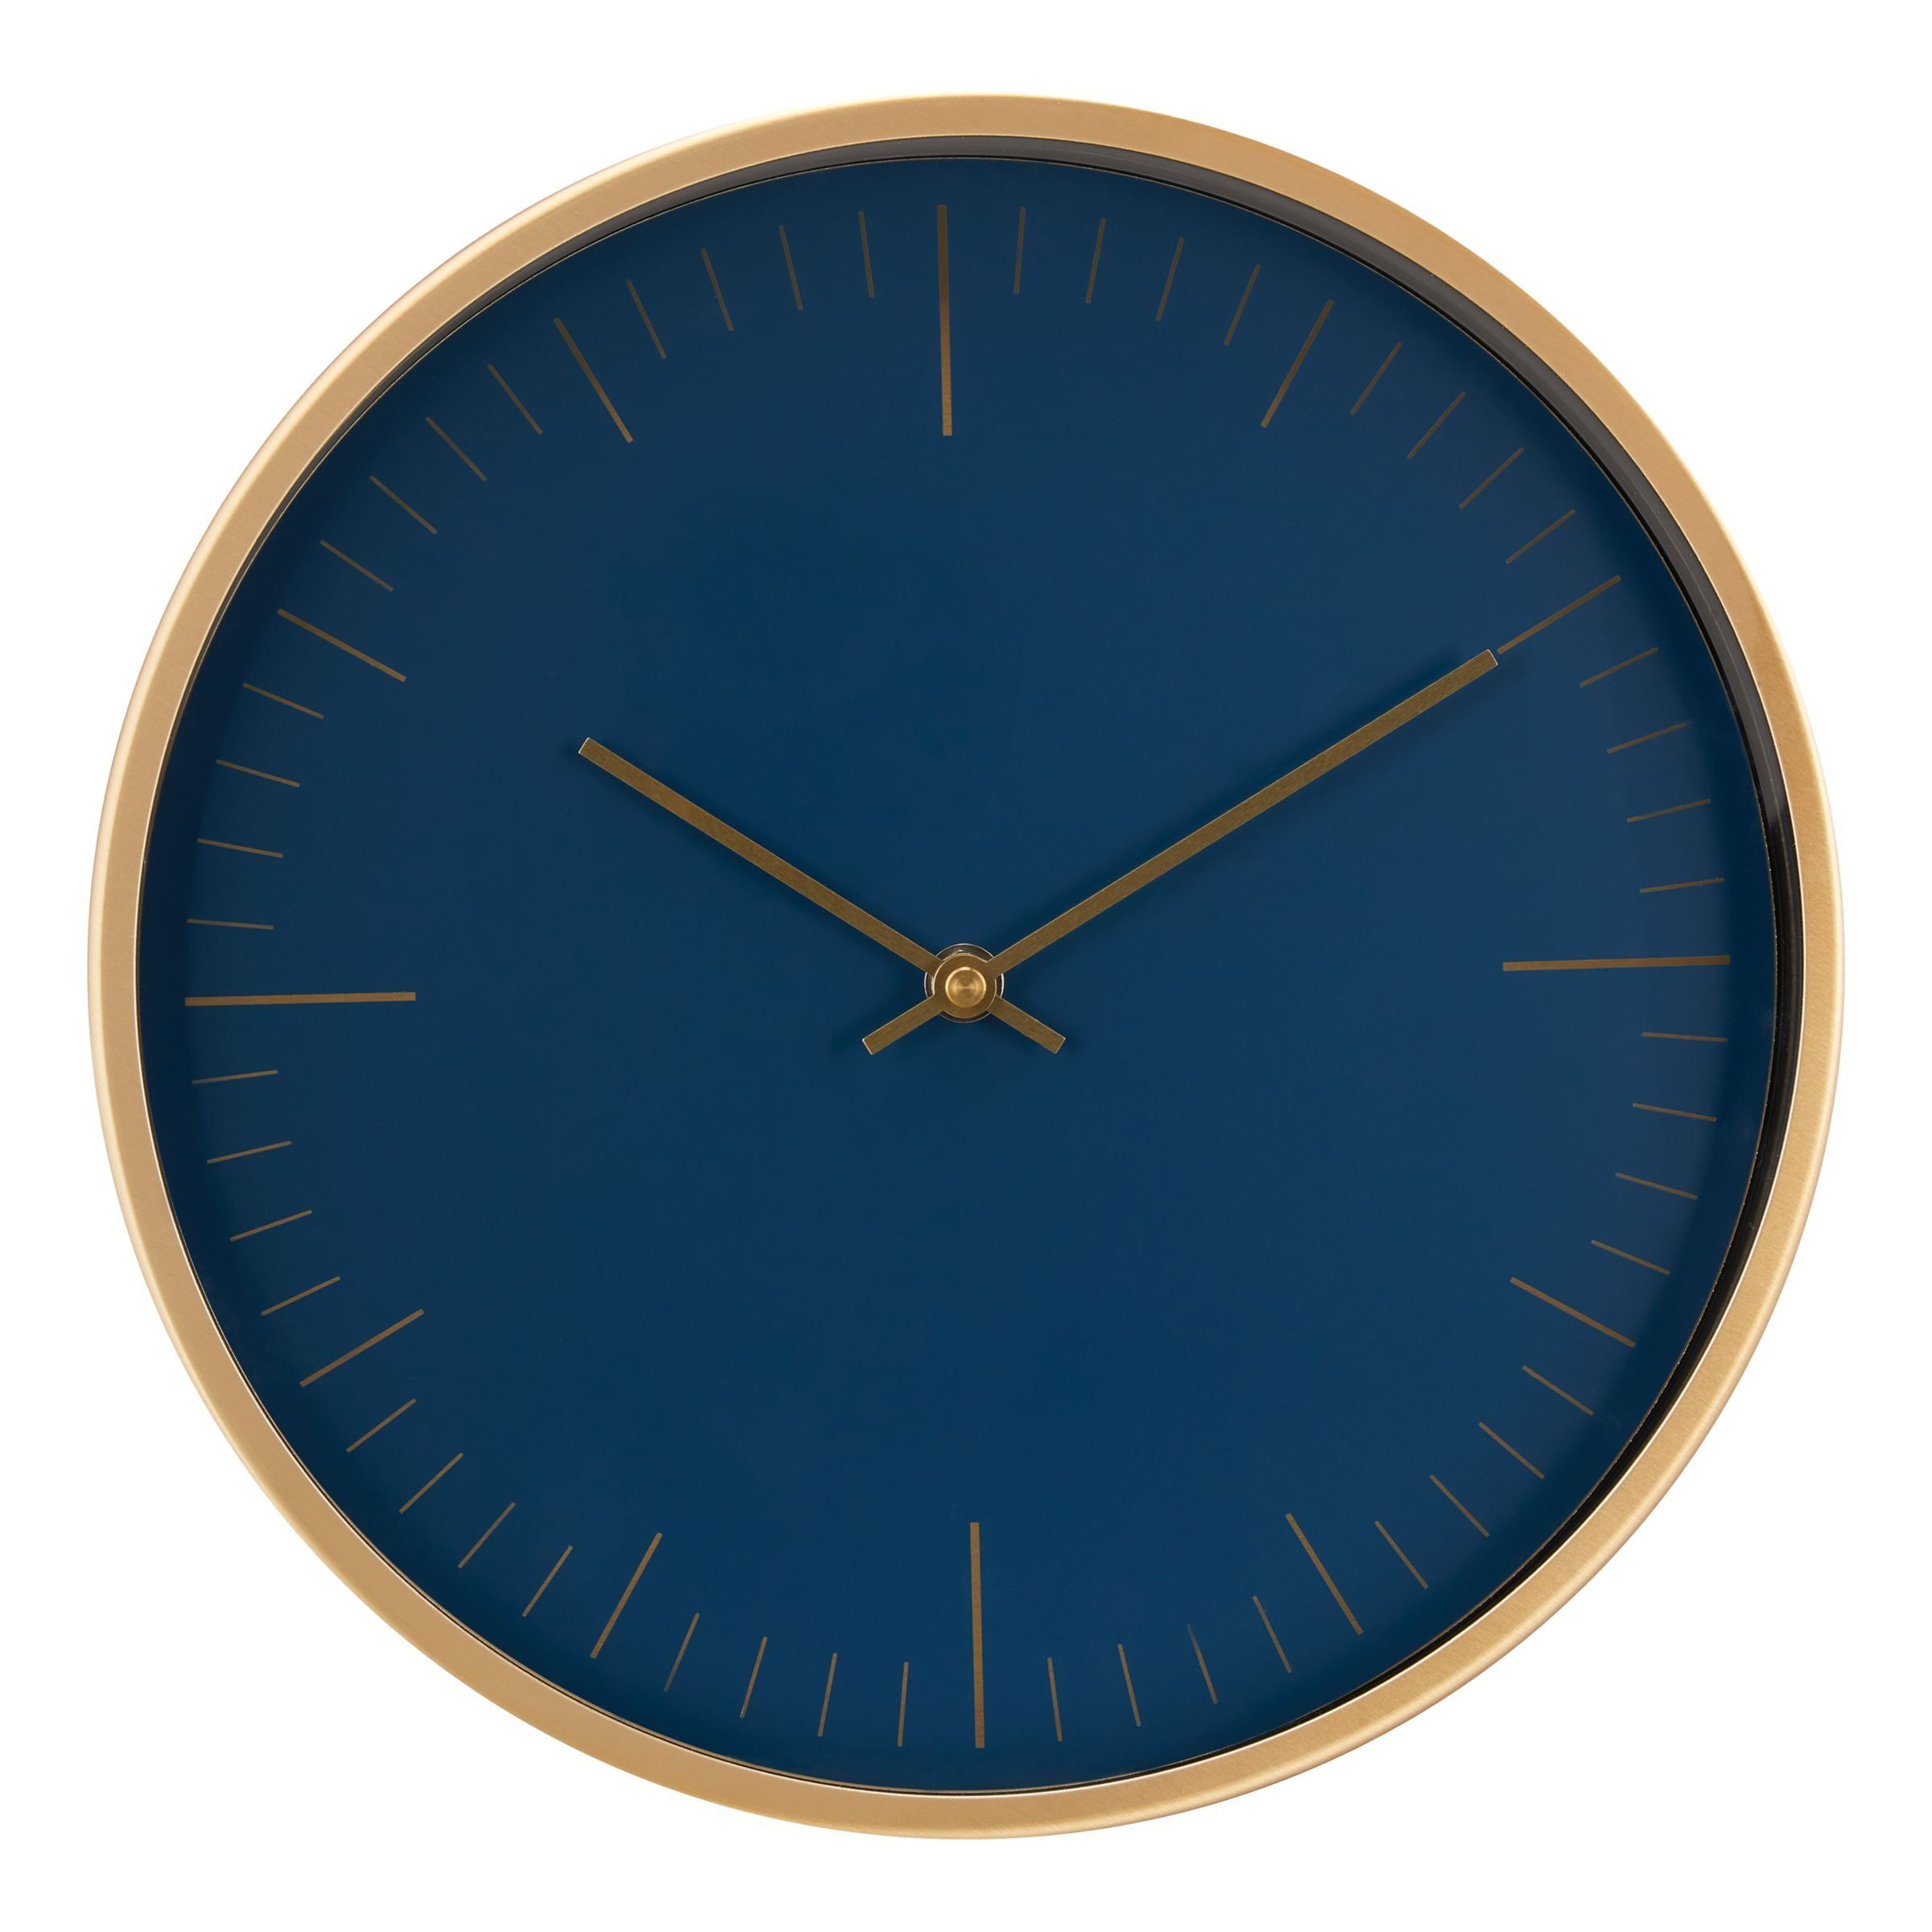 John Lewis Wall Clock, Navy/Brass, 30cm - image 1